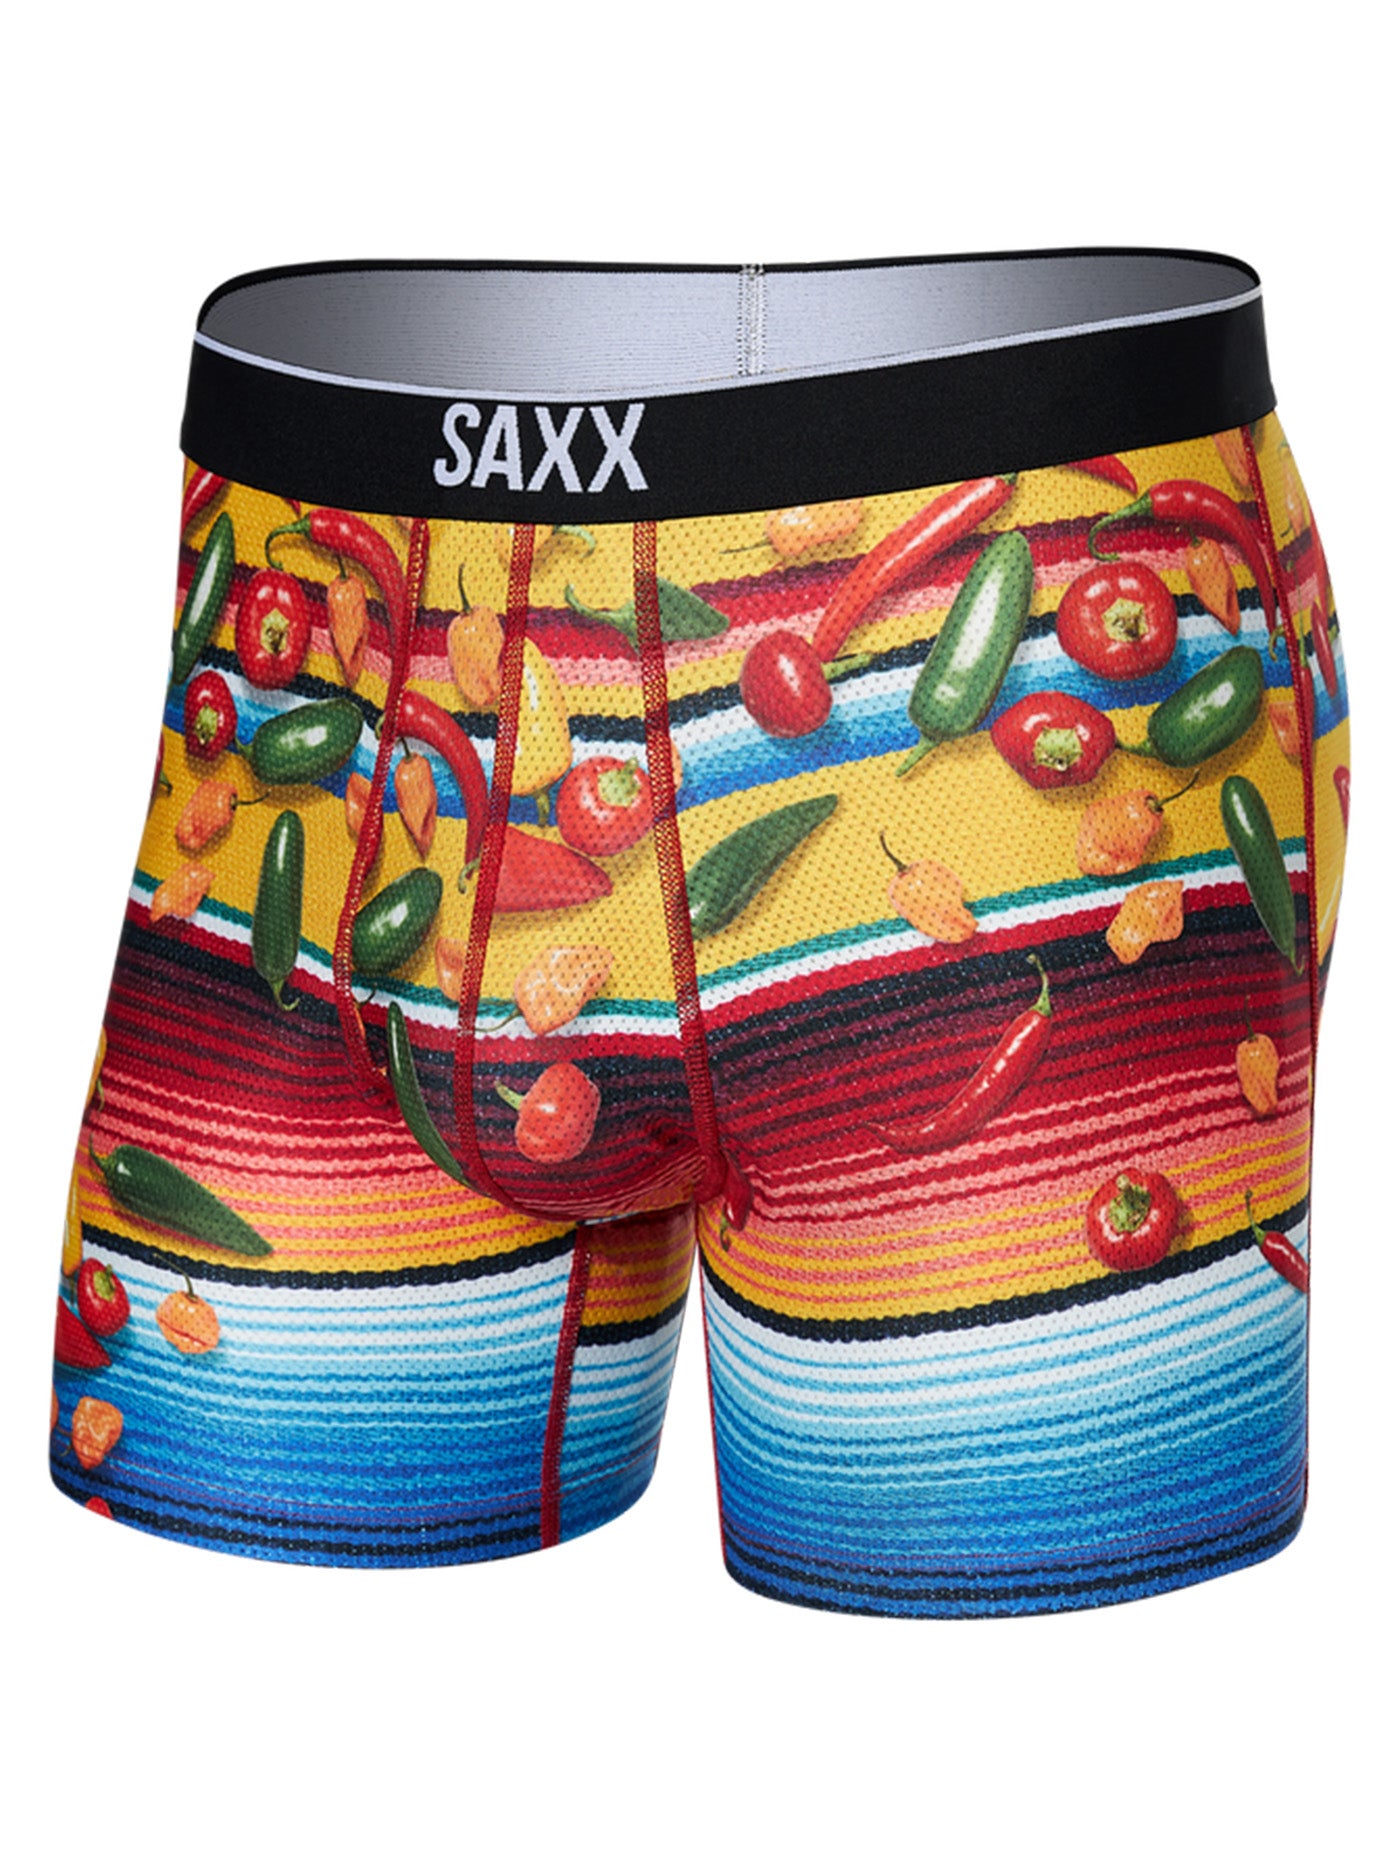 Saxx Ultra Boxer Brief Summer Transport - Bel Air